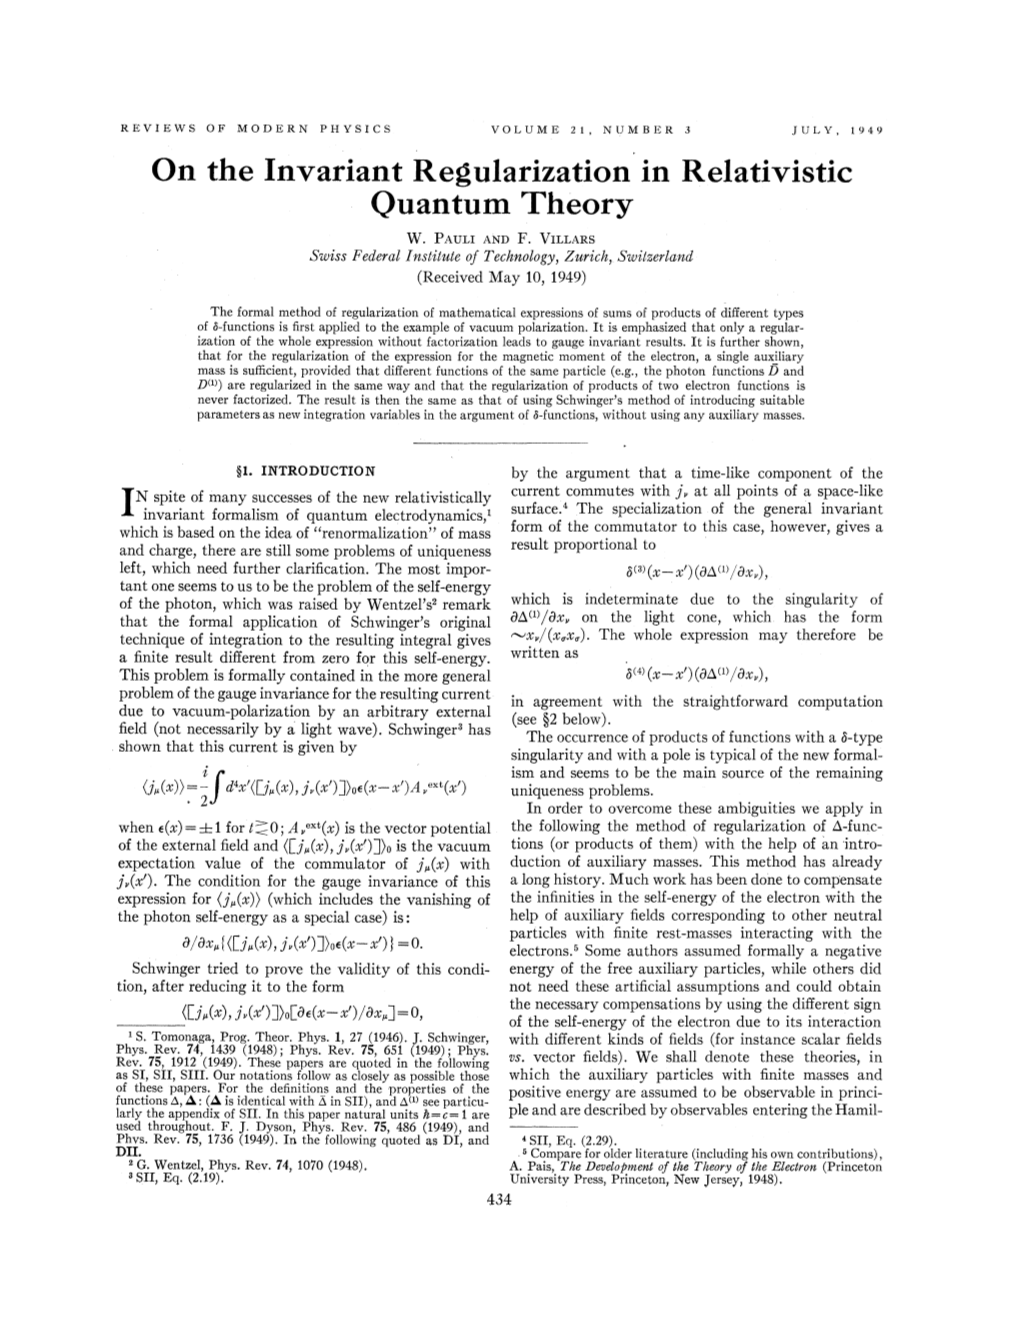 On the Invariant Regularization in Relativistic Quantum Theory